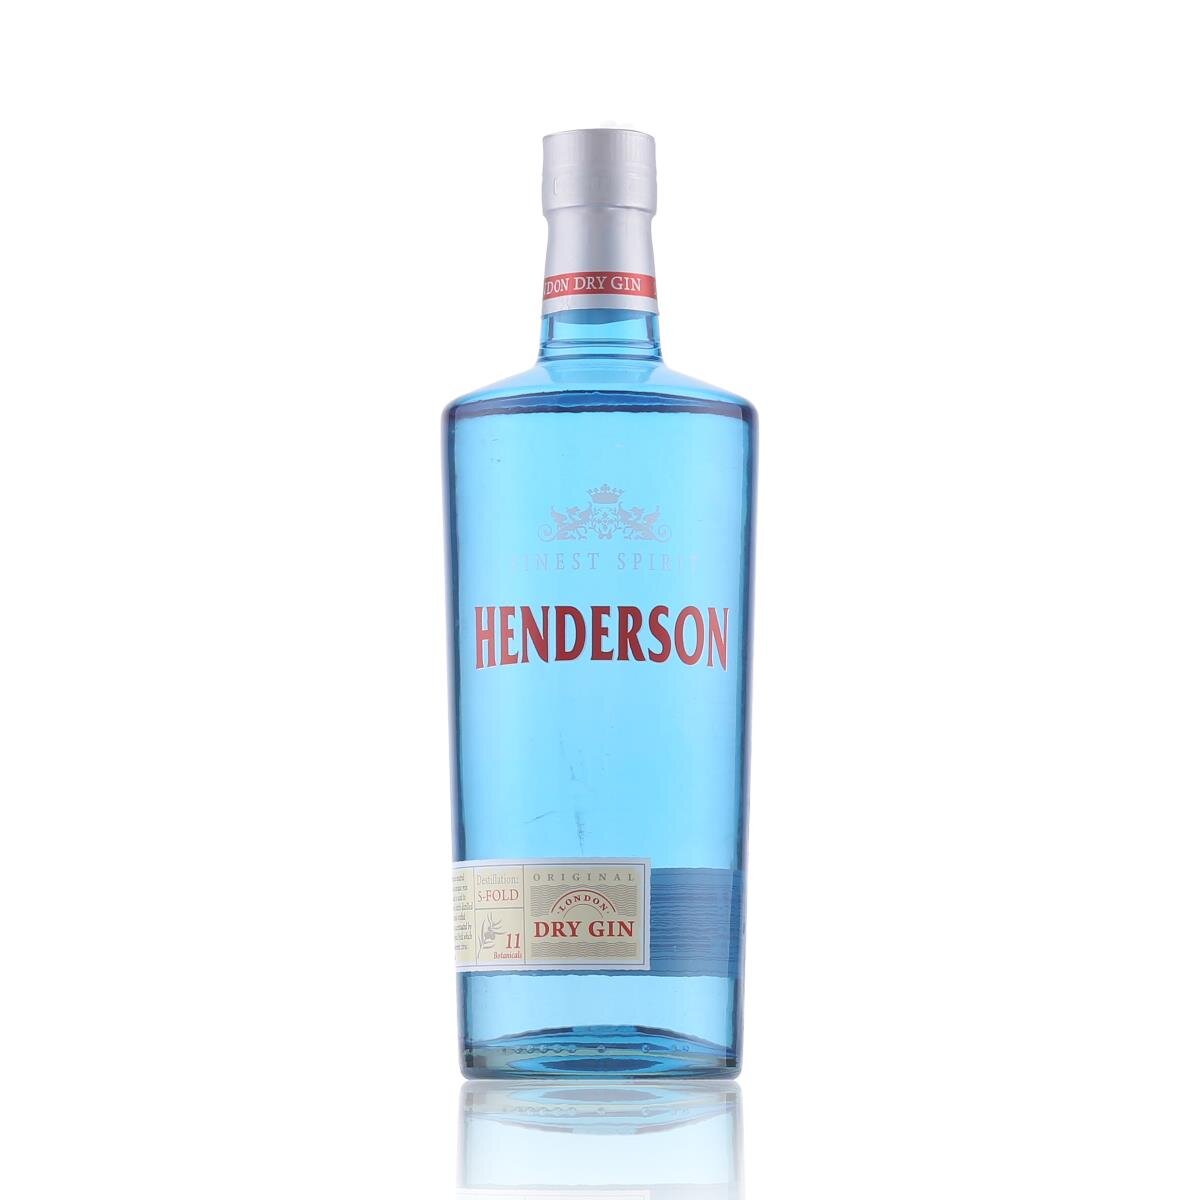 Henderson London Dry Gin 40% Vol. 0,7l